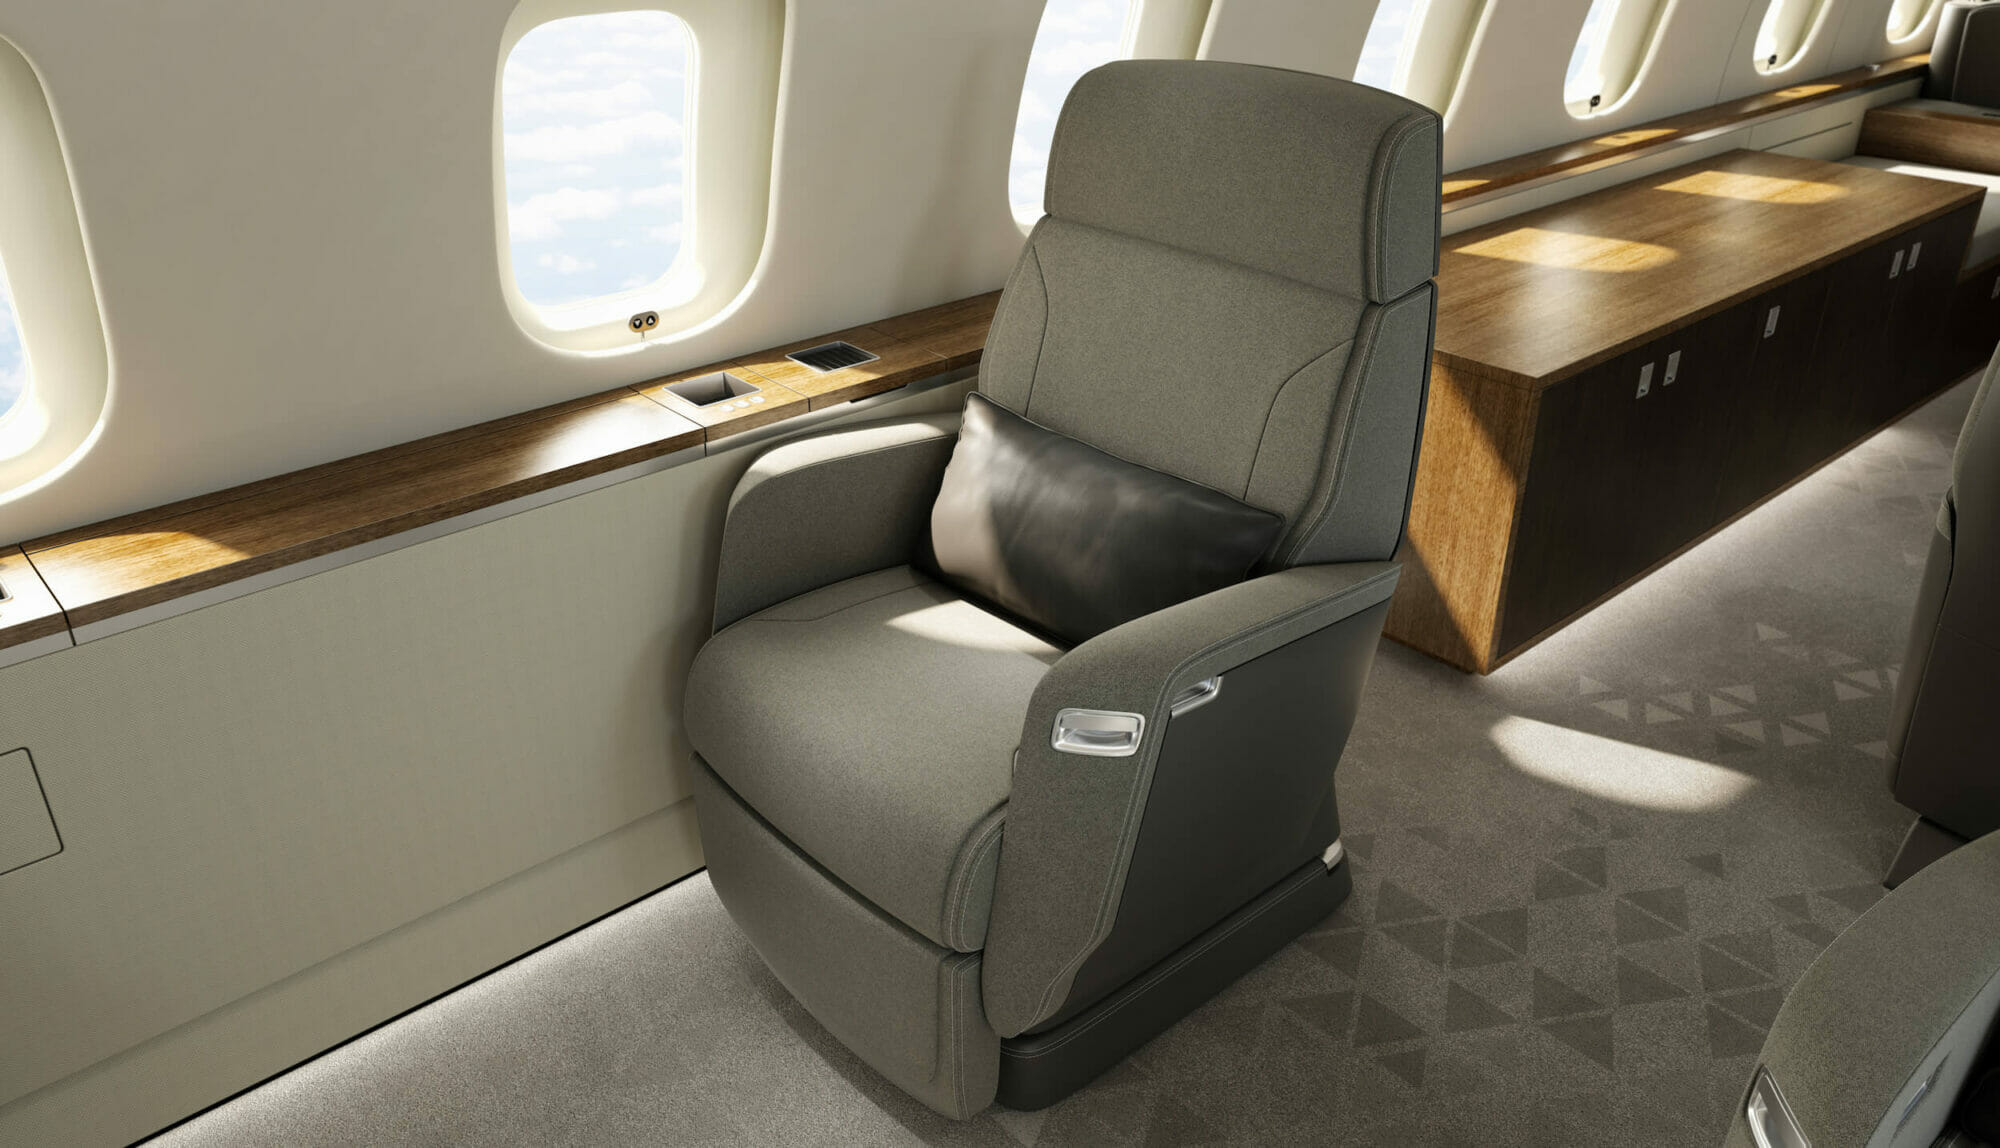 Bombardier Global 5500 Interior Seat